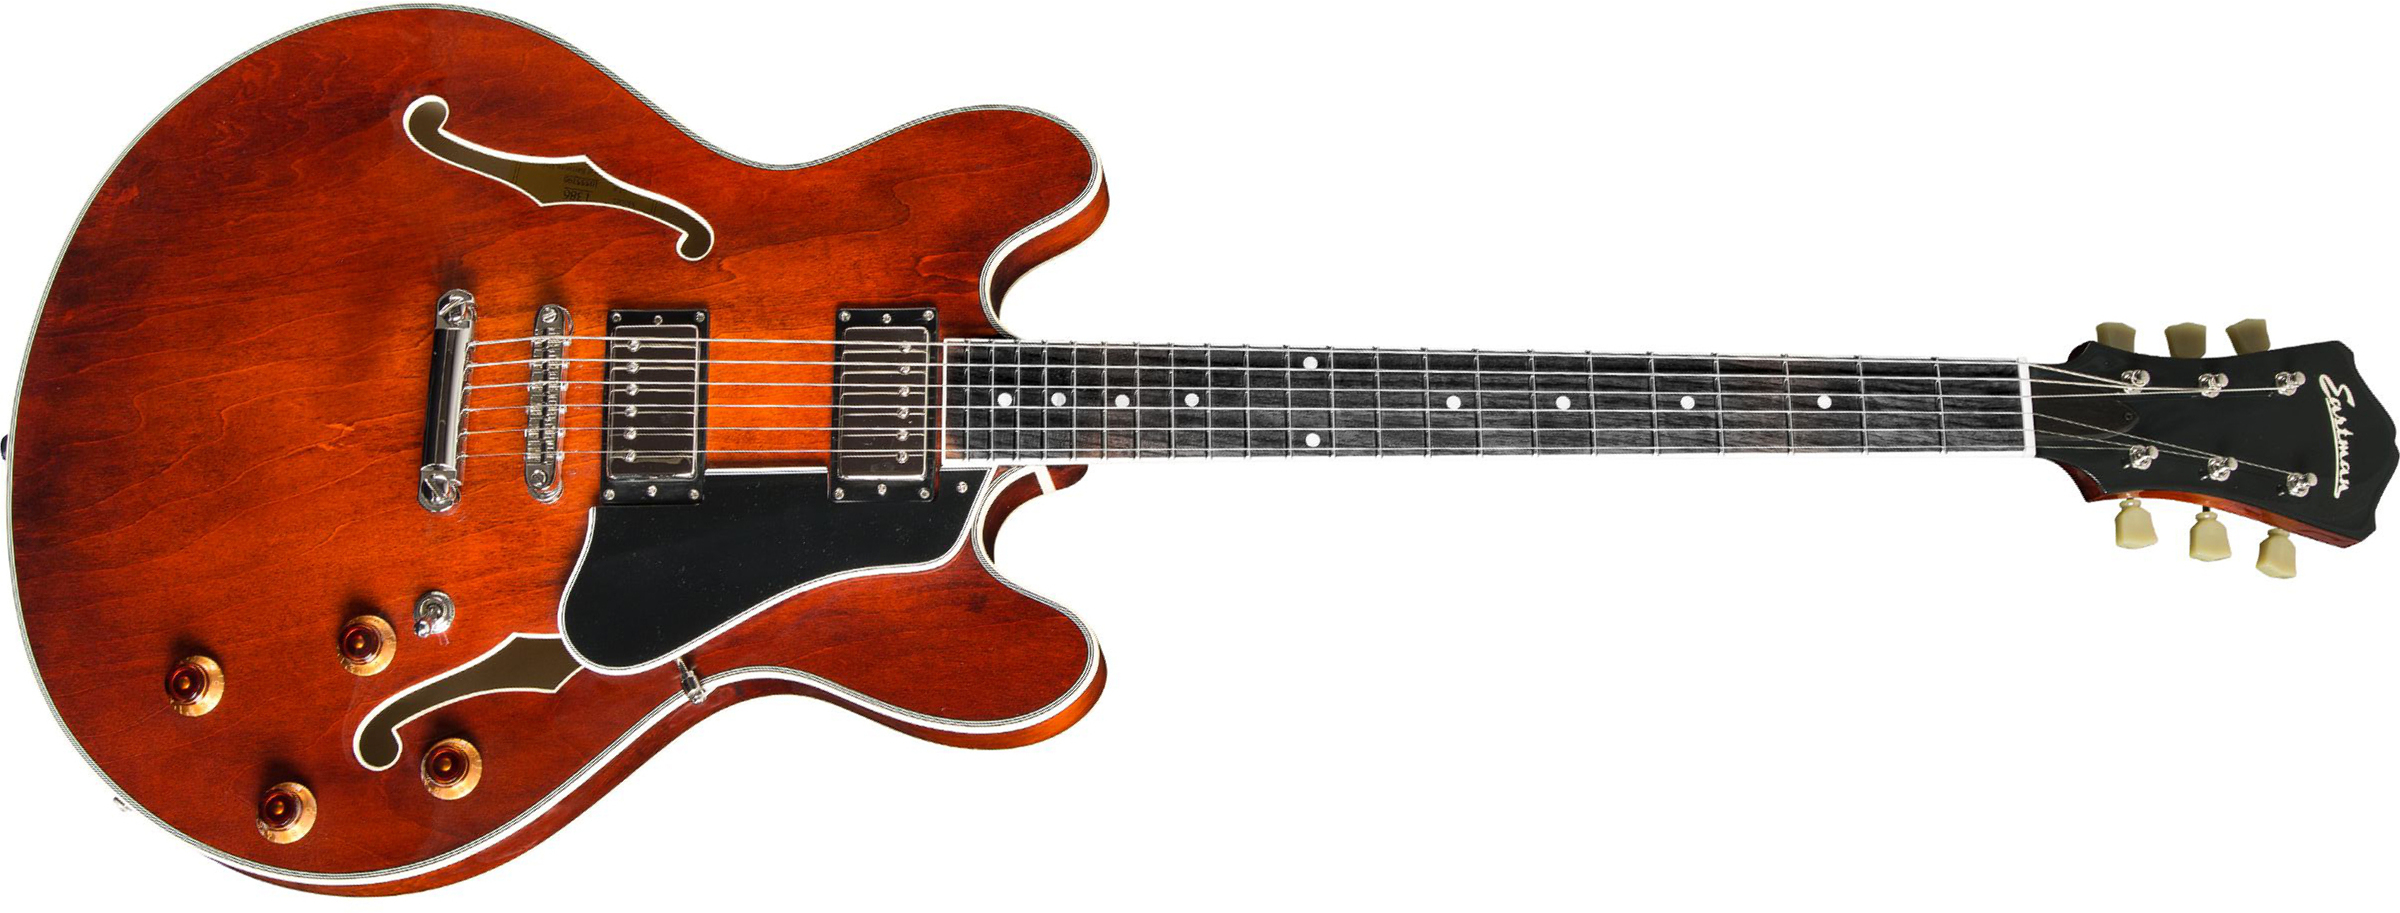 Eastman T386 Thinline Laminate Tout Erable Ht Eb - Classic - Semi-hollow electric guitar - Main picture